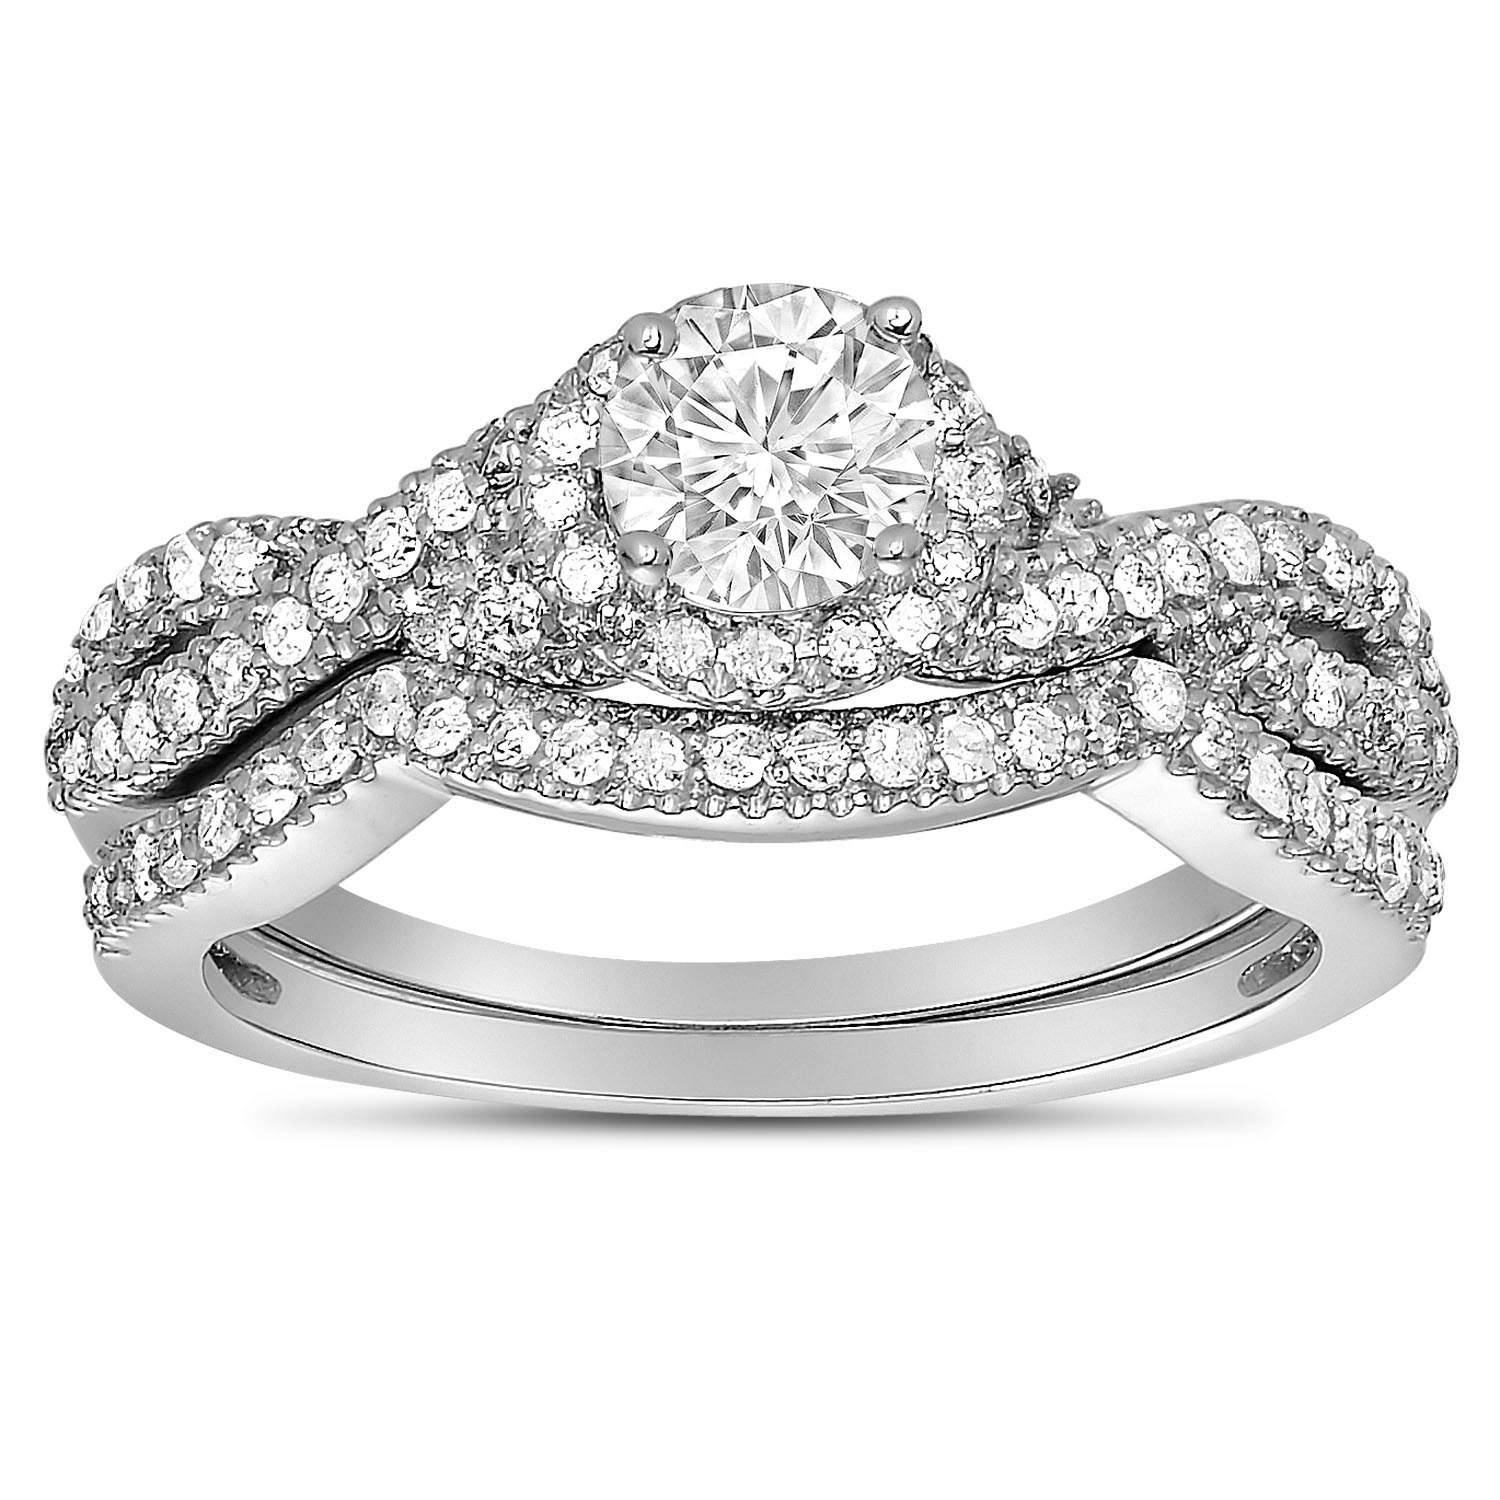 White Gold Wedding Rings For Her
 2 Carat Round Diamond Infinity Wedding Ring Set in White